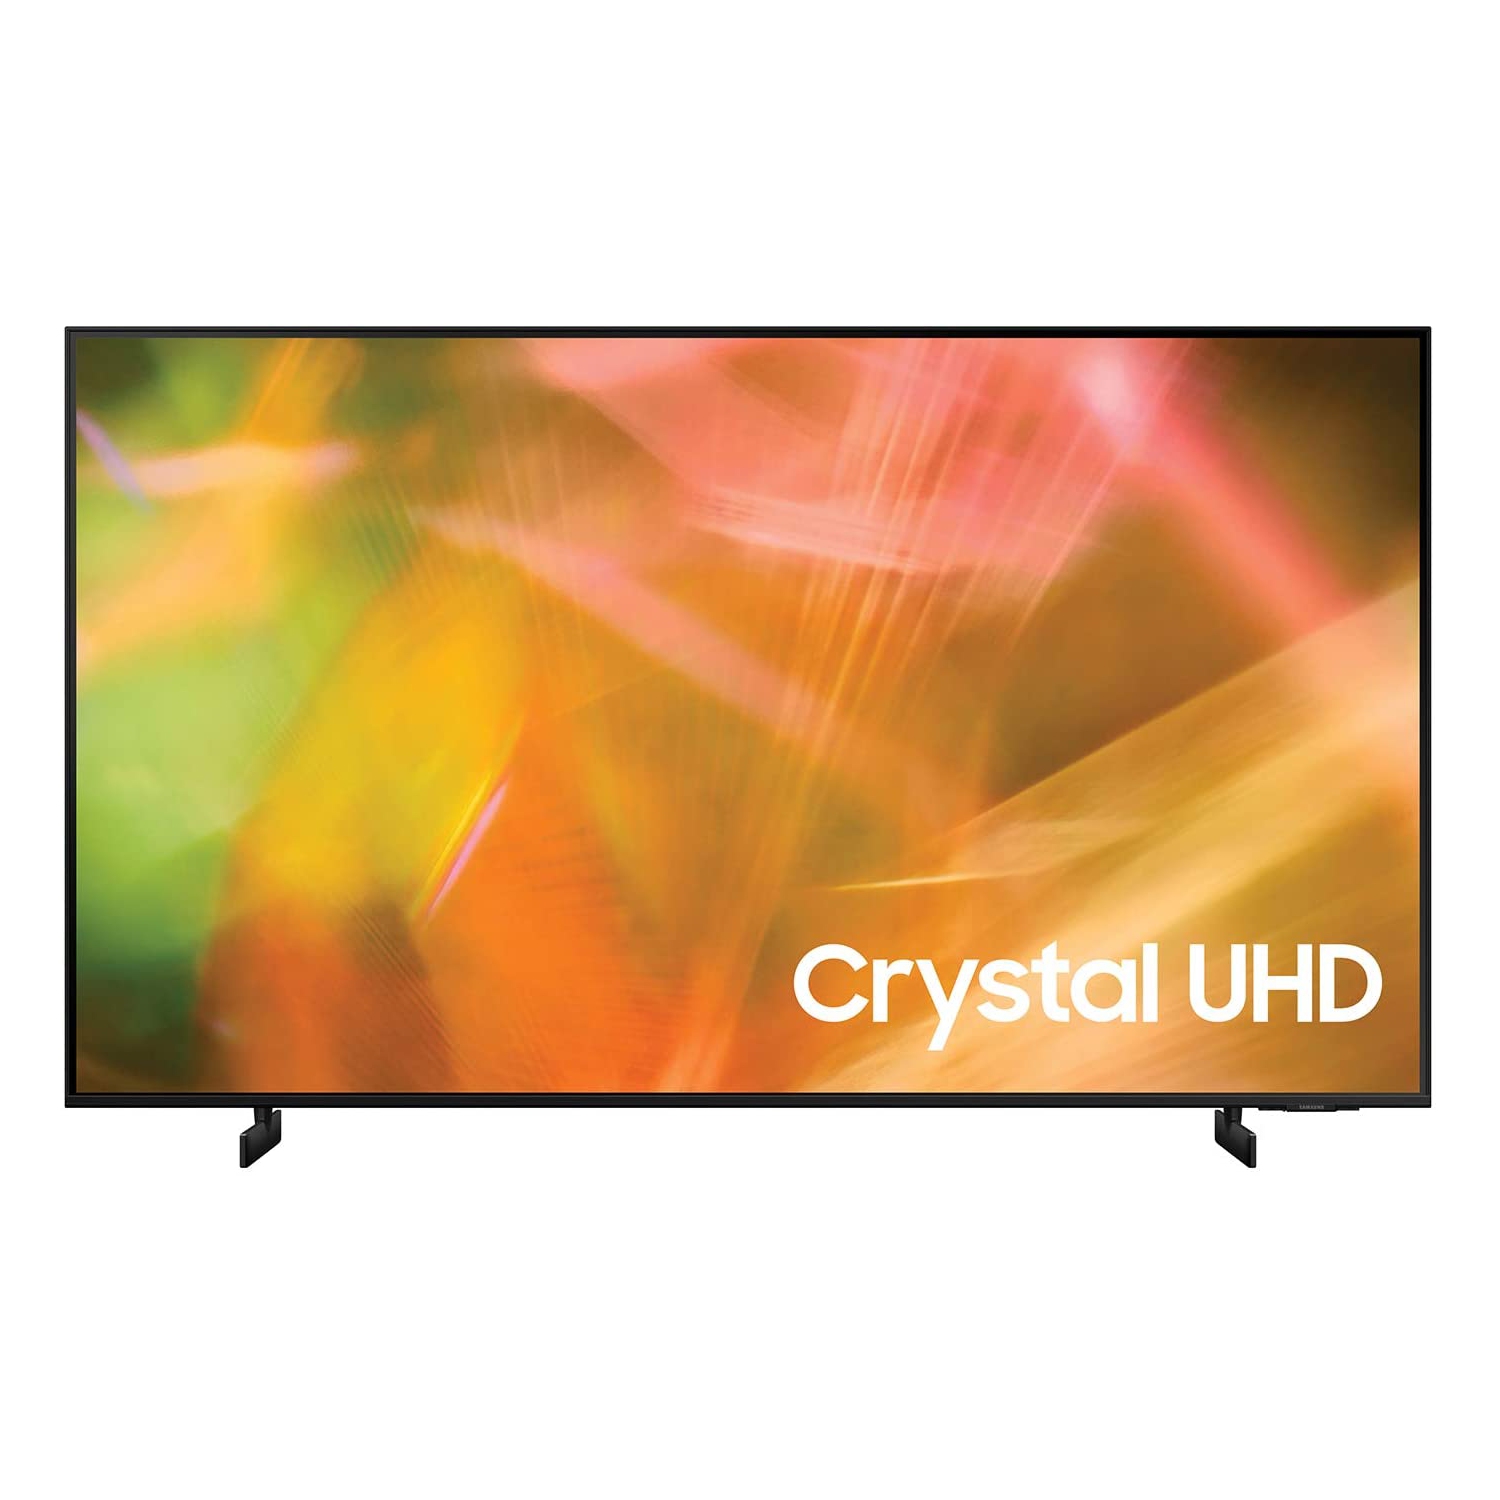 Samsung - 43" AU8000 LED 4K Ultra HD HDR Smart TV [UN43AU8000FXZC][Canada Version] - OPEN BOX - 10/10 Condition